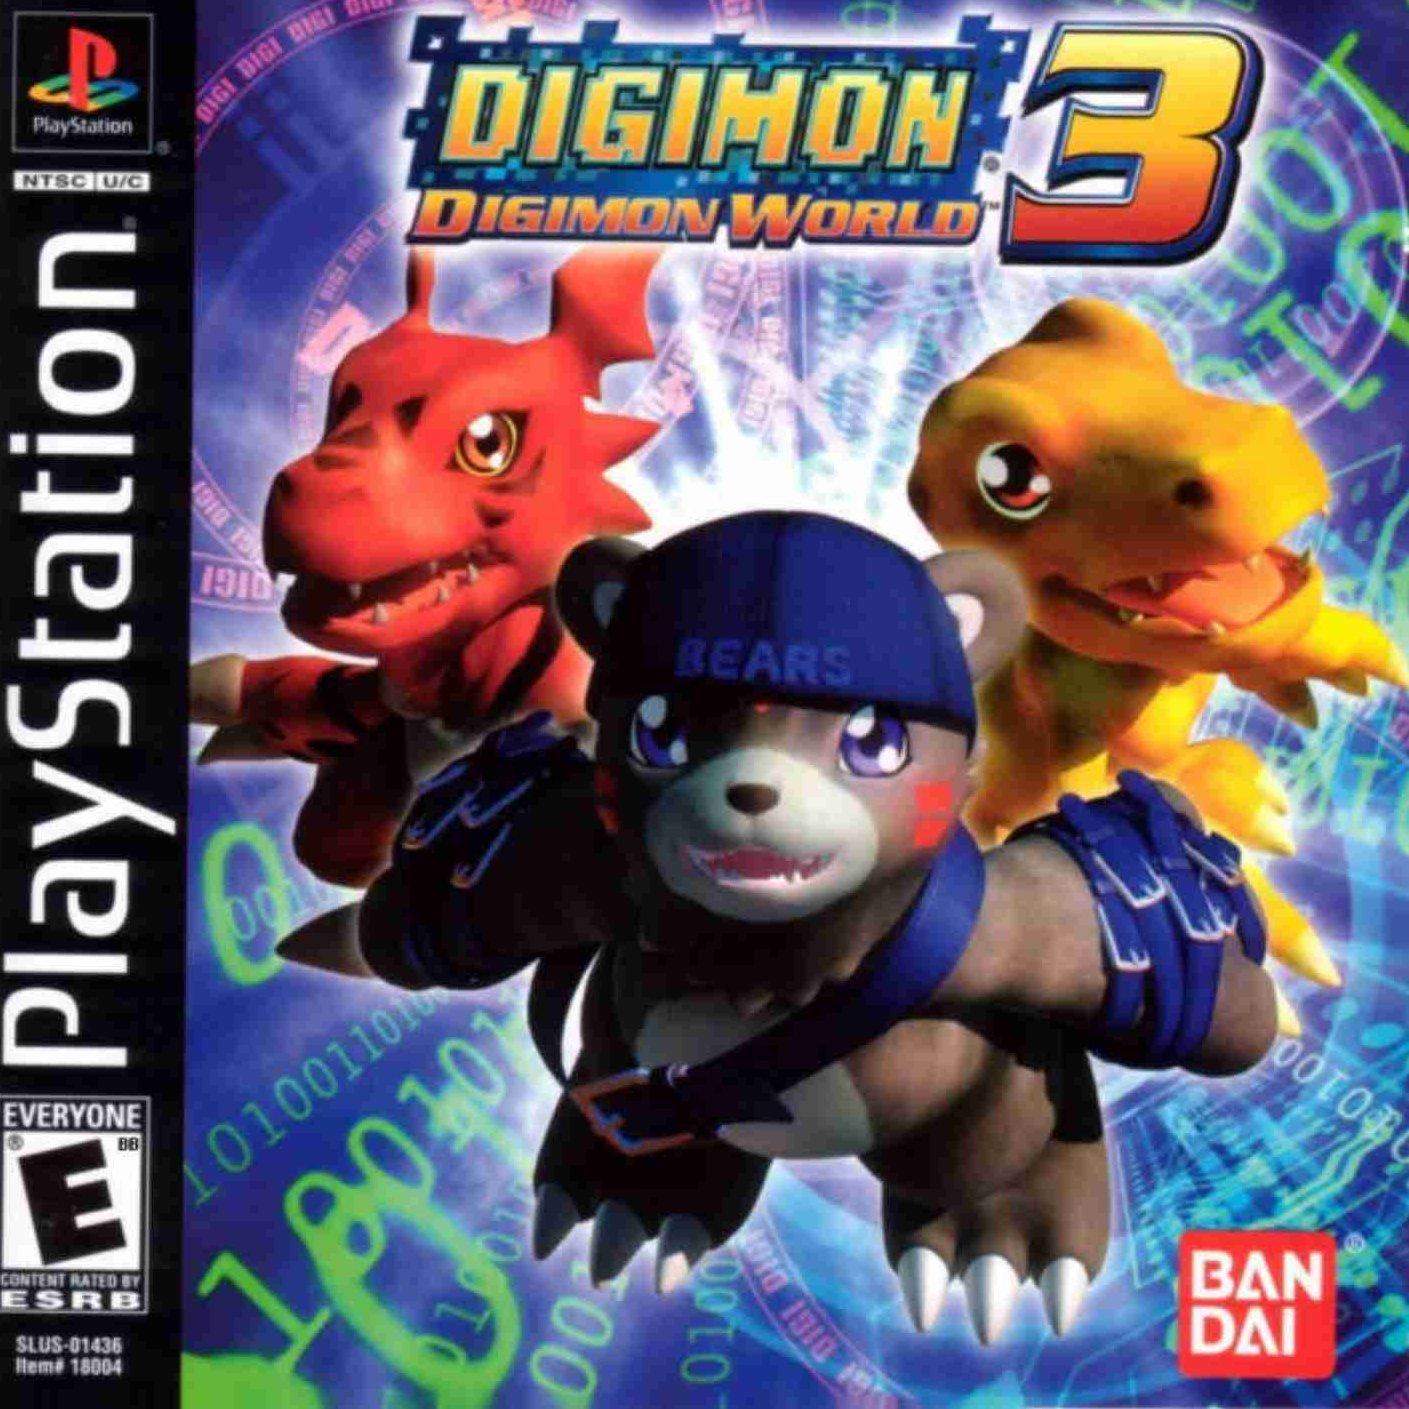 Digimon World 2003 for psx 